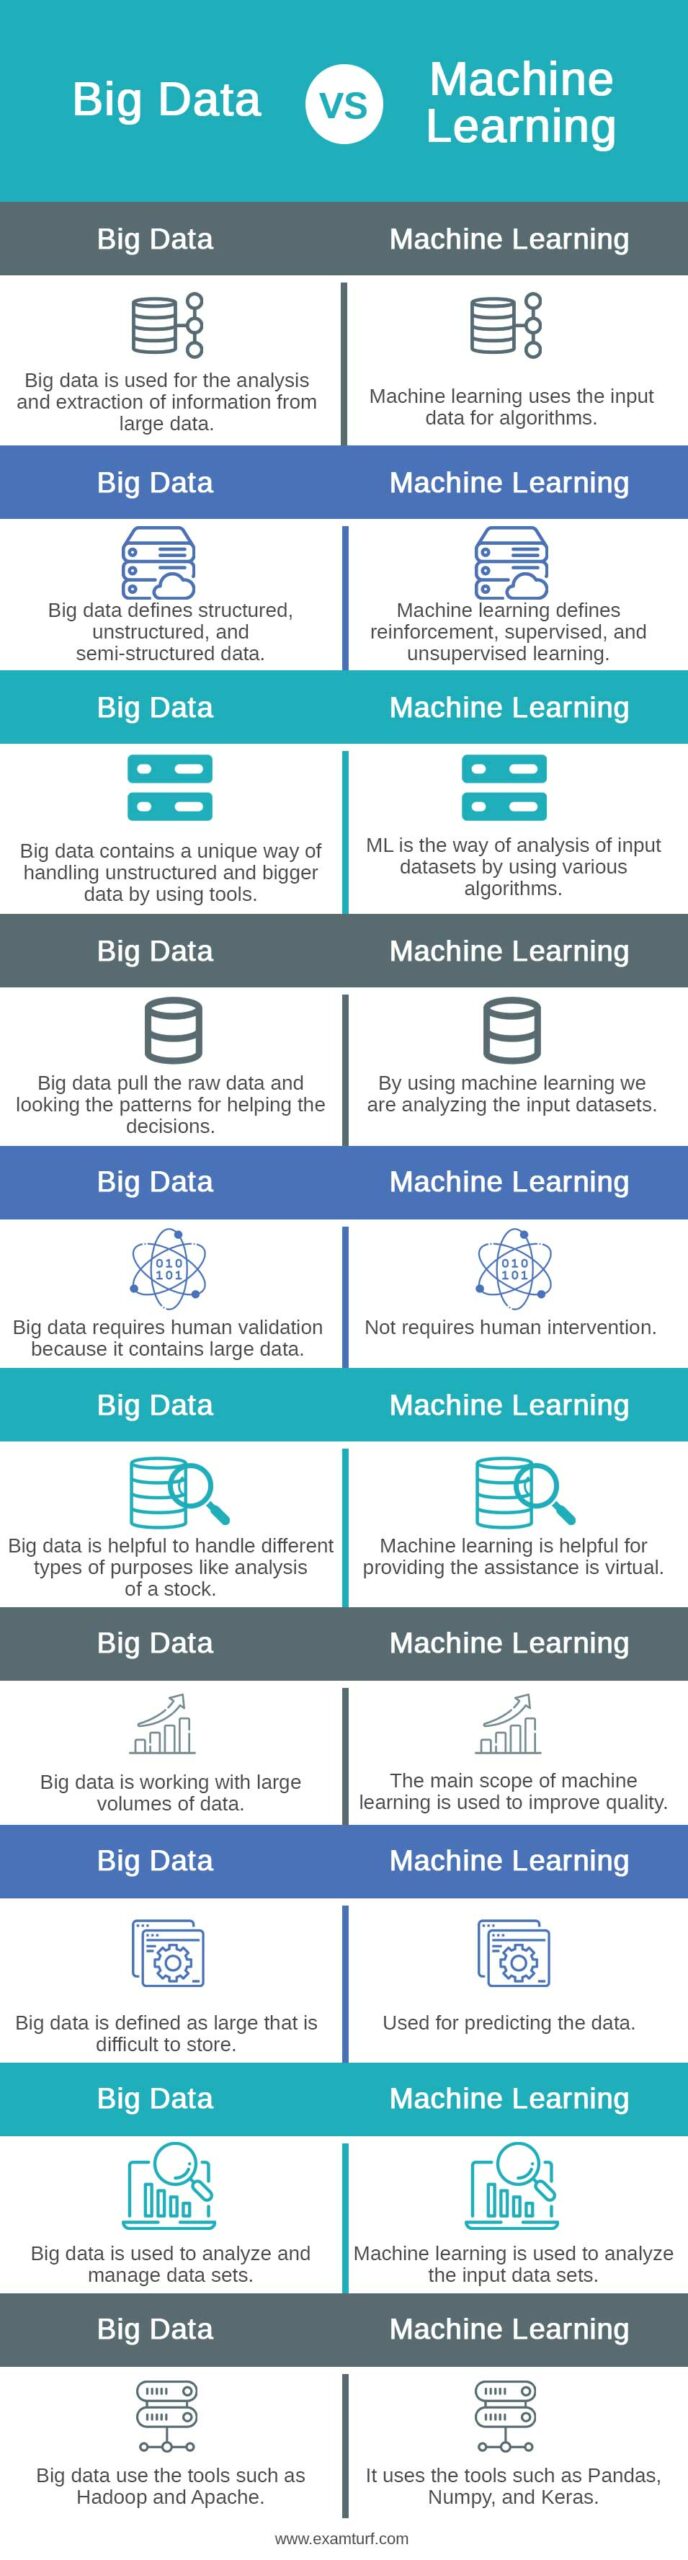 Big-Data-vs-Machine-Learning-info